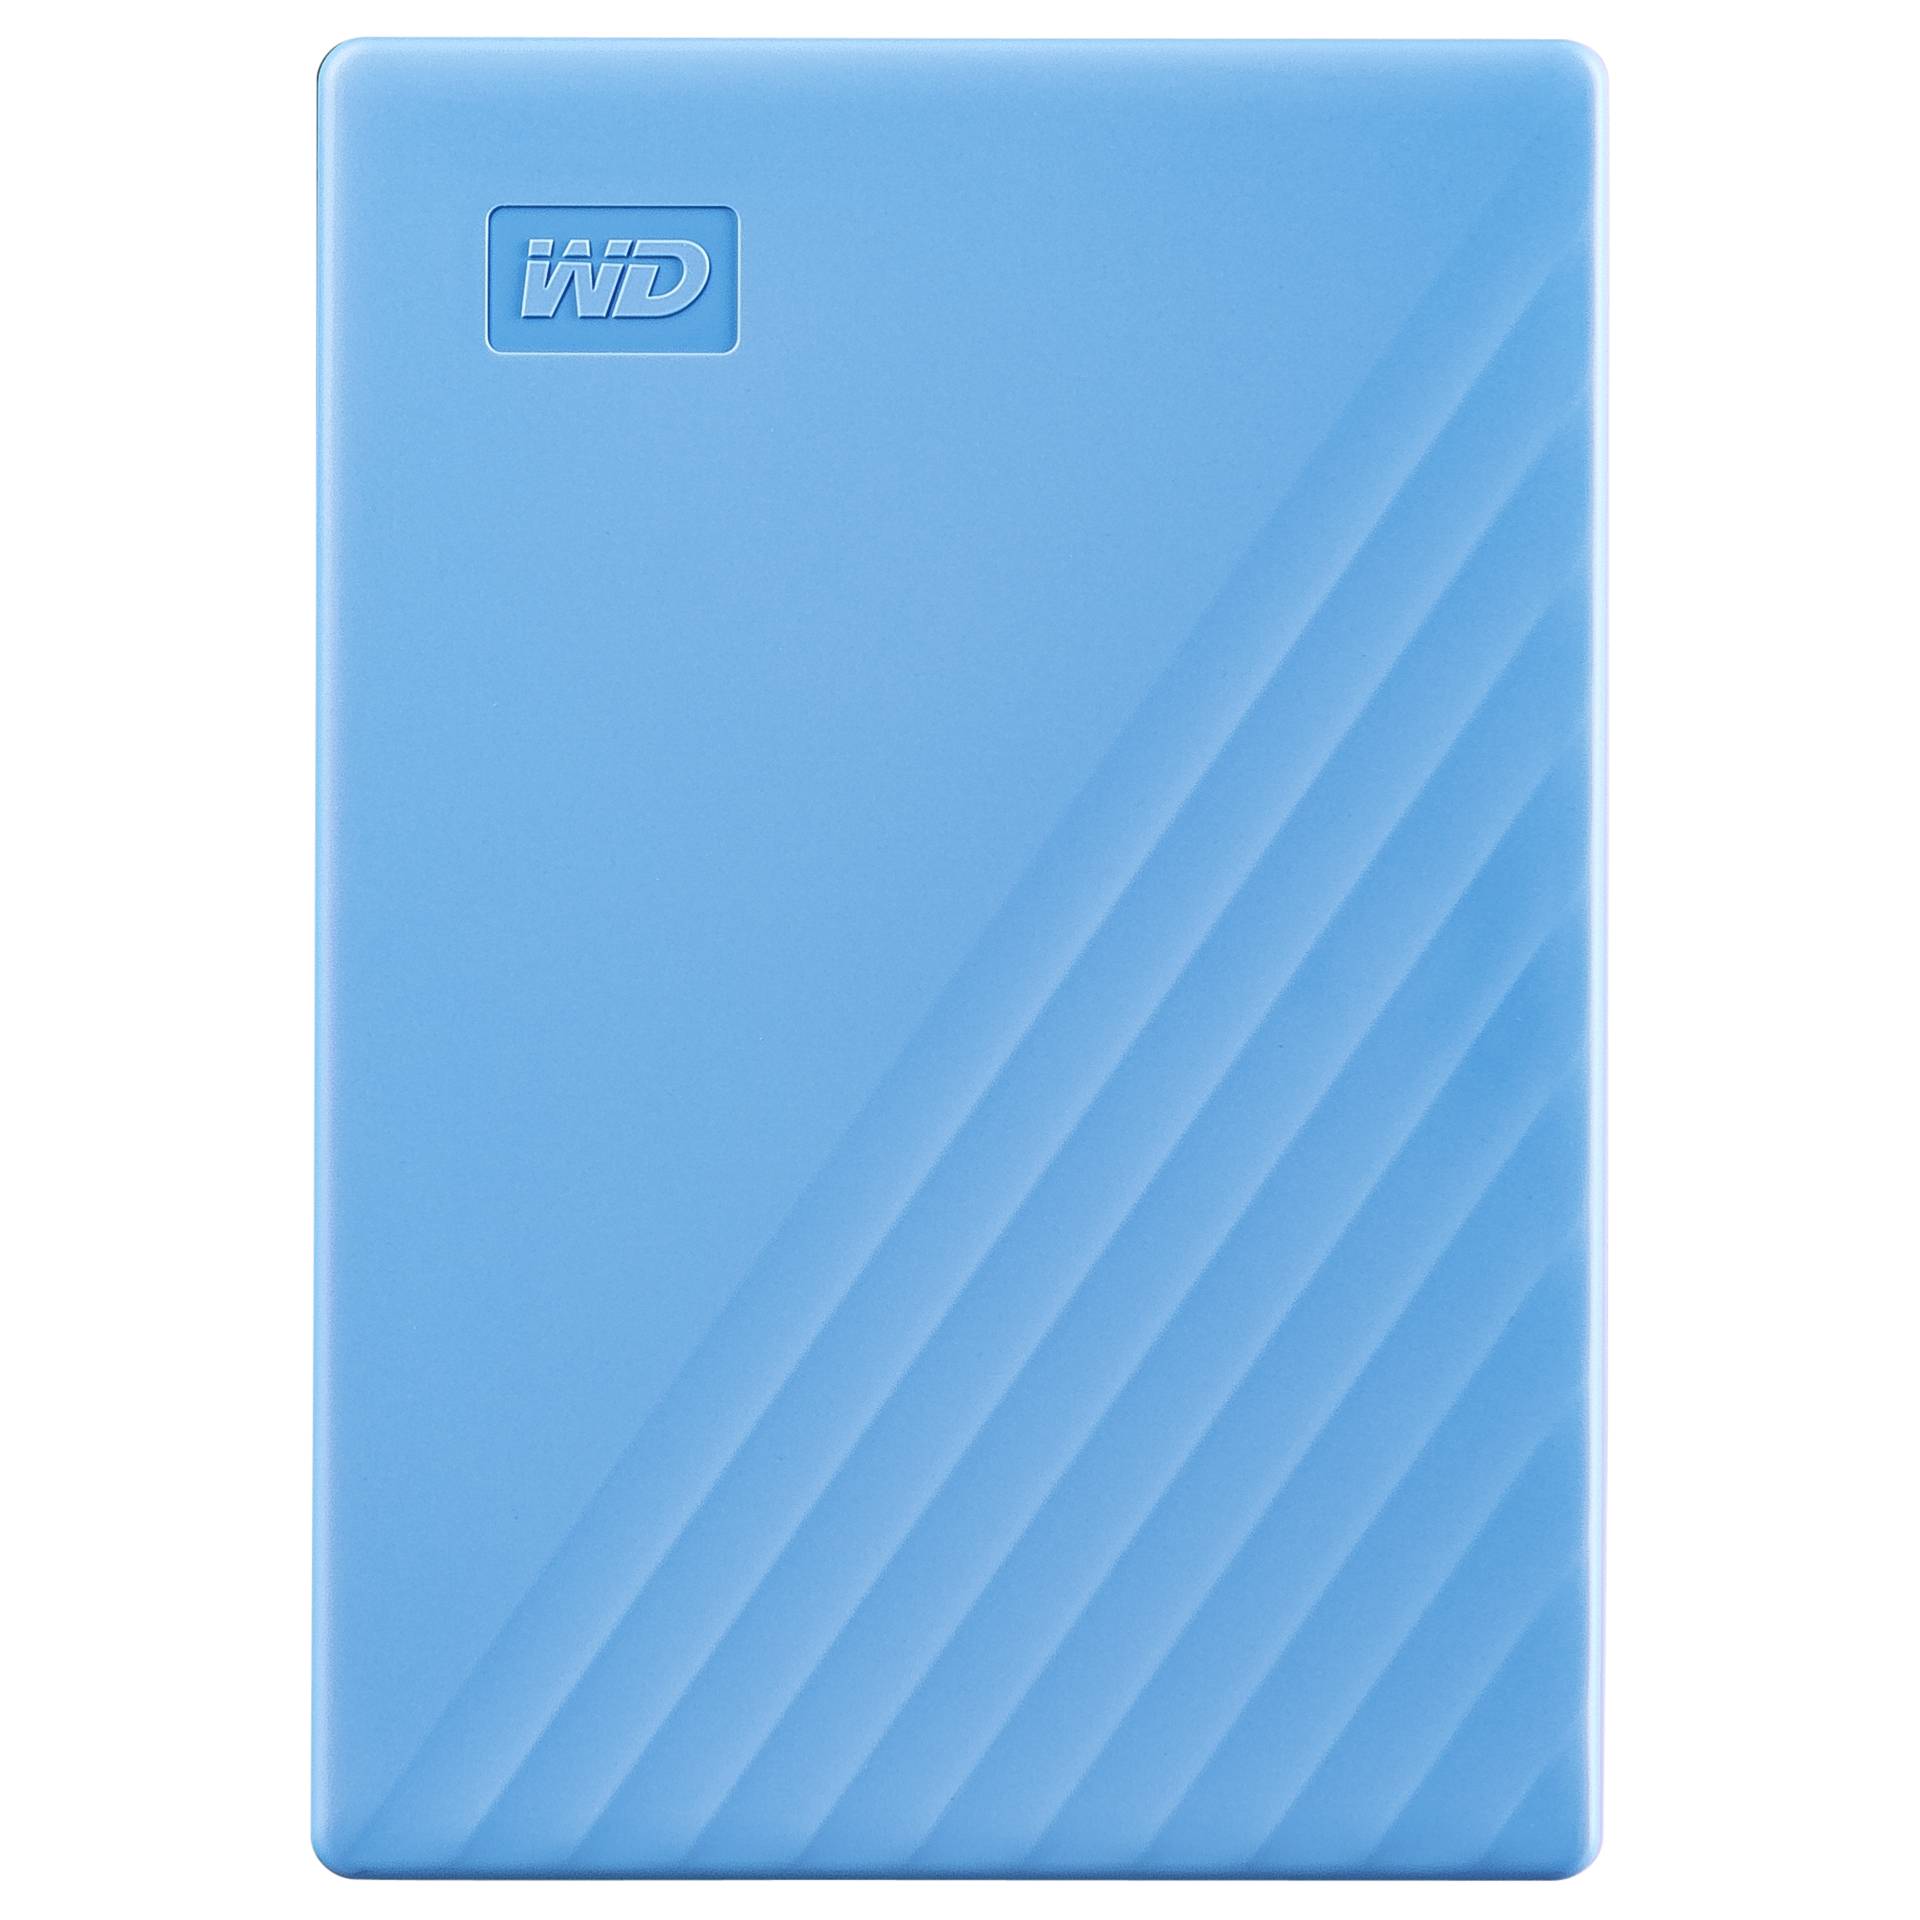 4.0 TB Western Digital WD My Passport Portable Storage blau USB 3.0 Micro-B